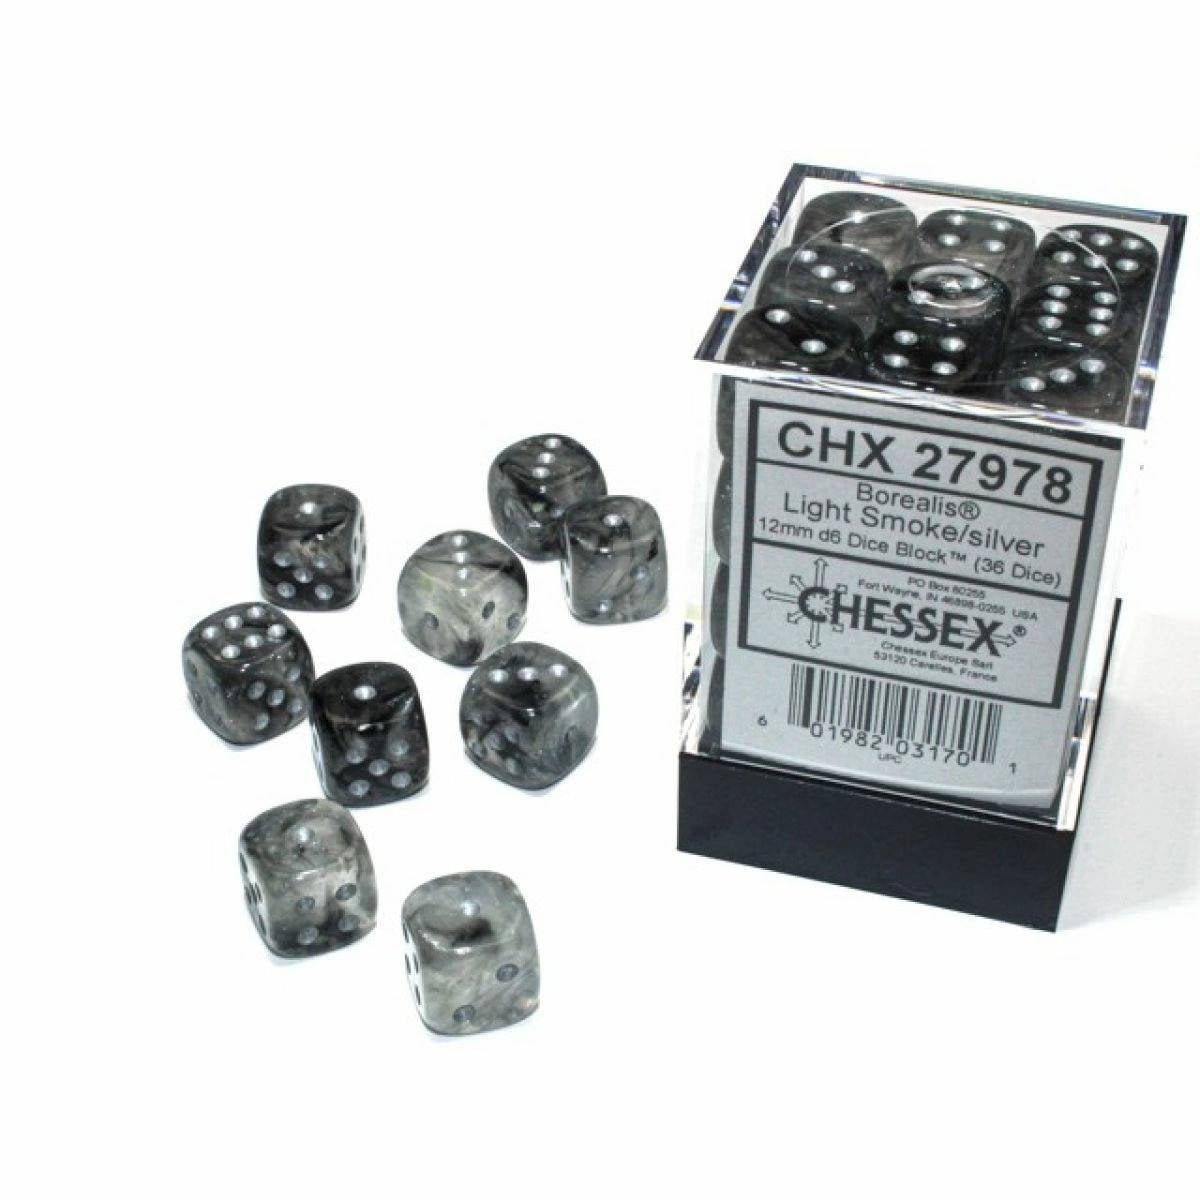 Chessex - Borealis 12mm D6 Light Smoke/Silver Luminary Block (36) CHX 27978